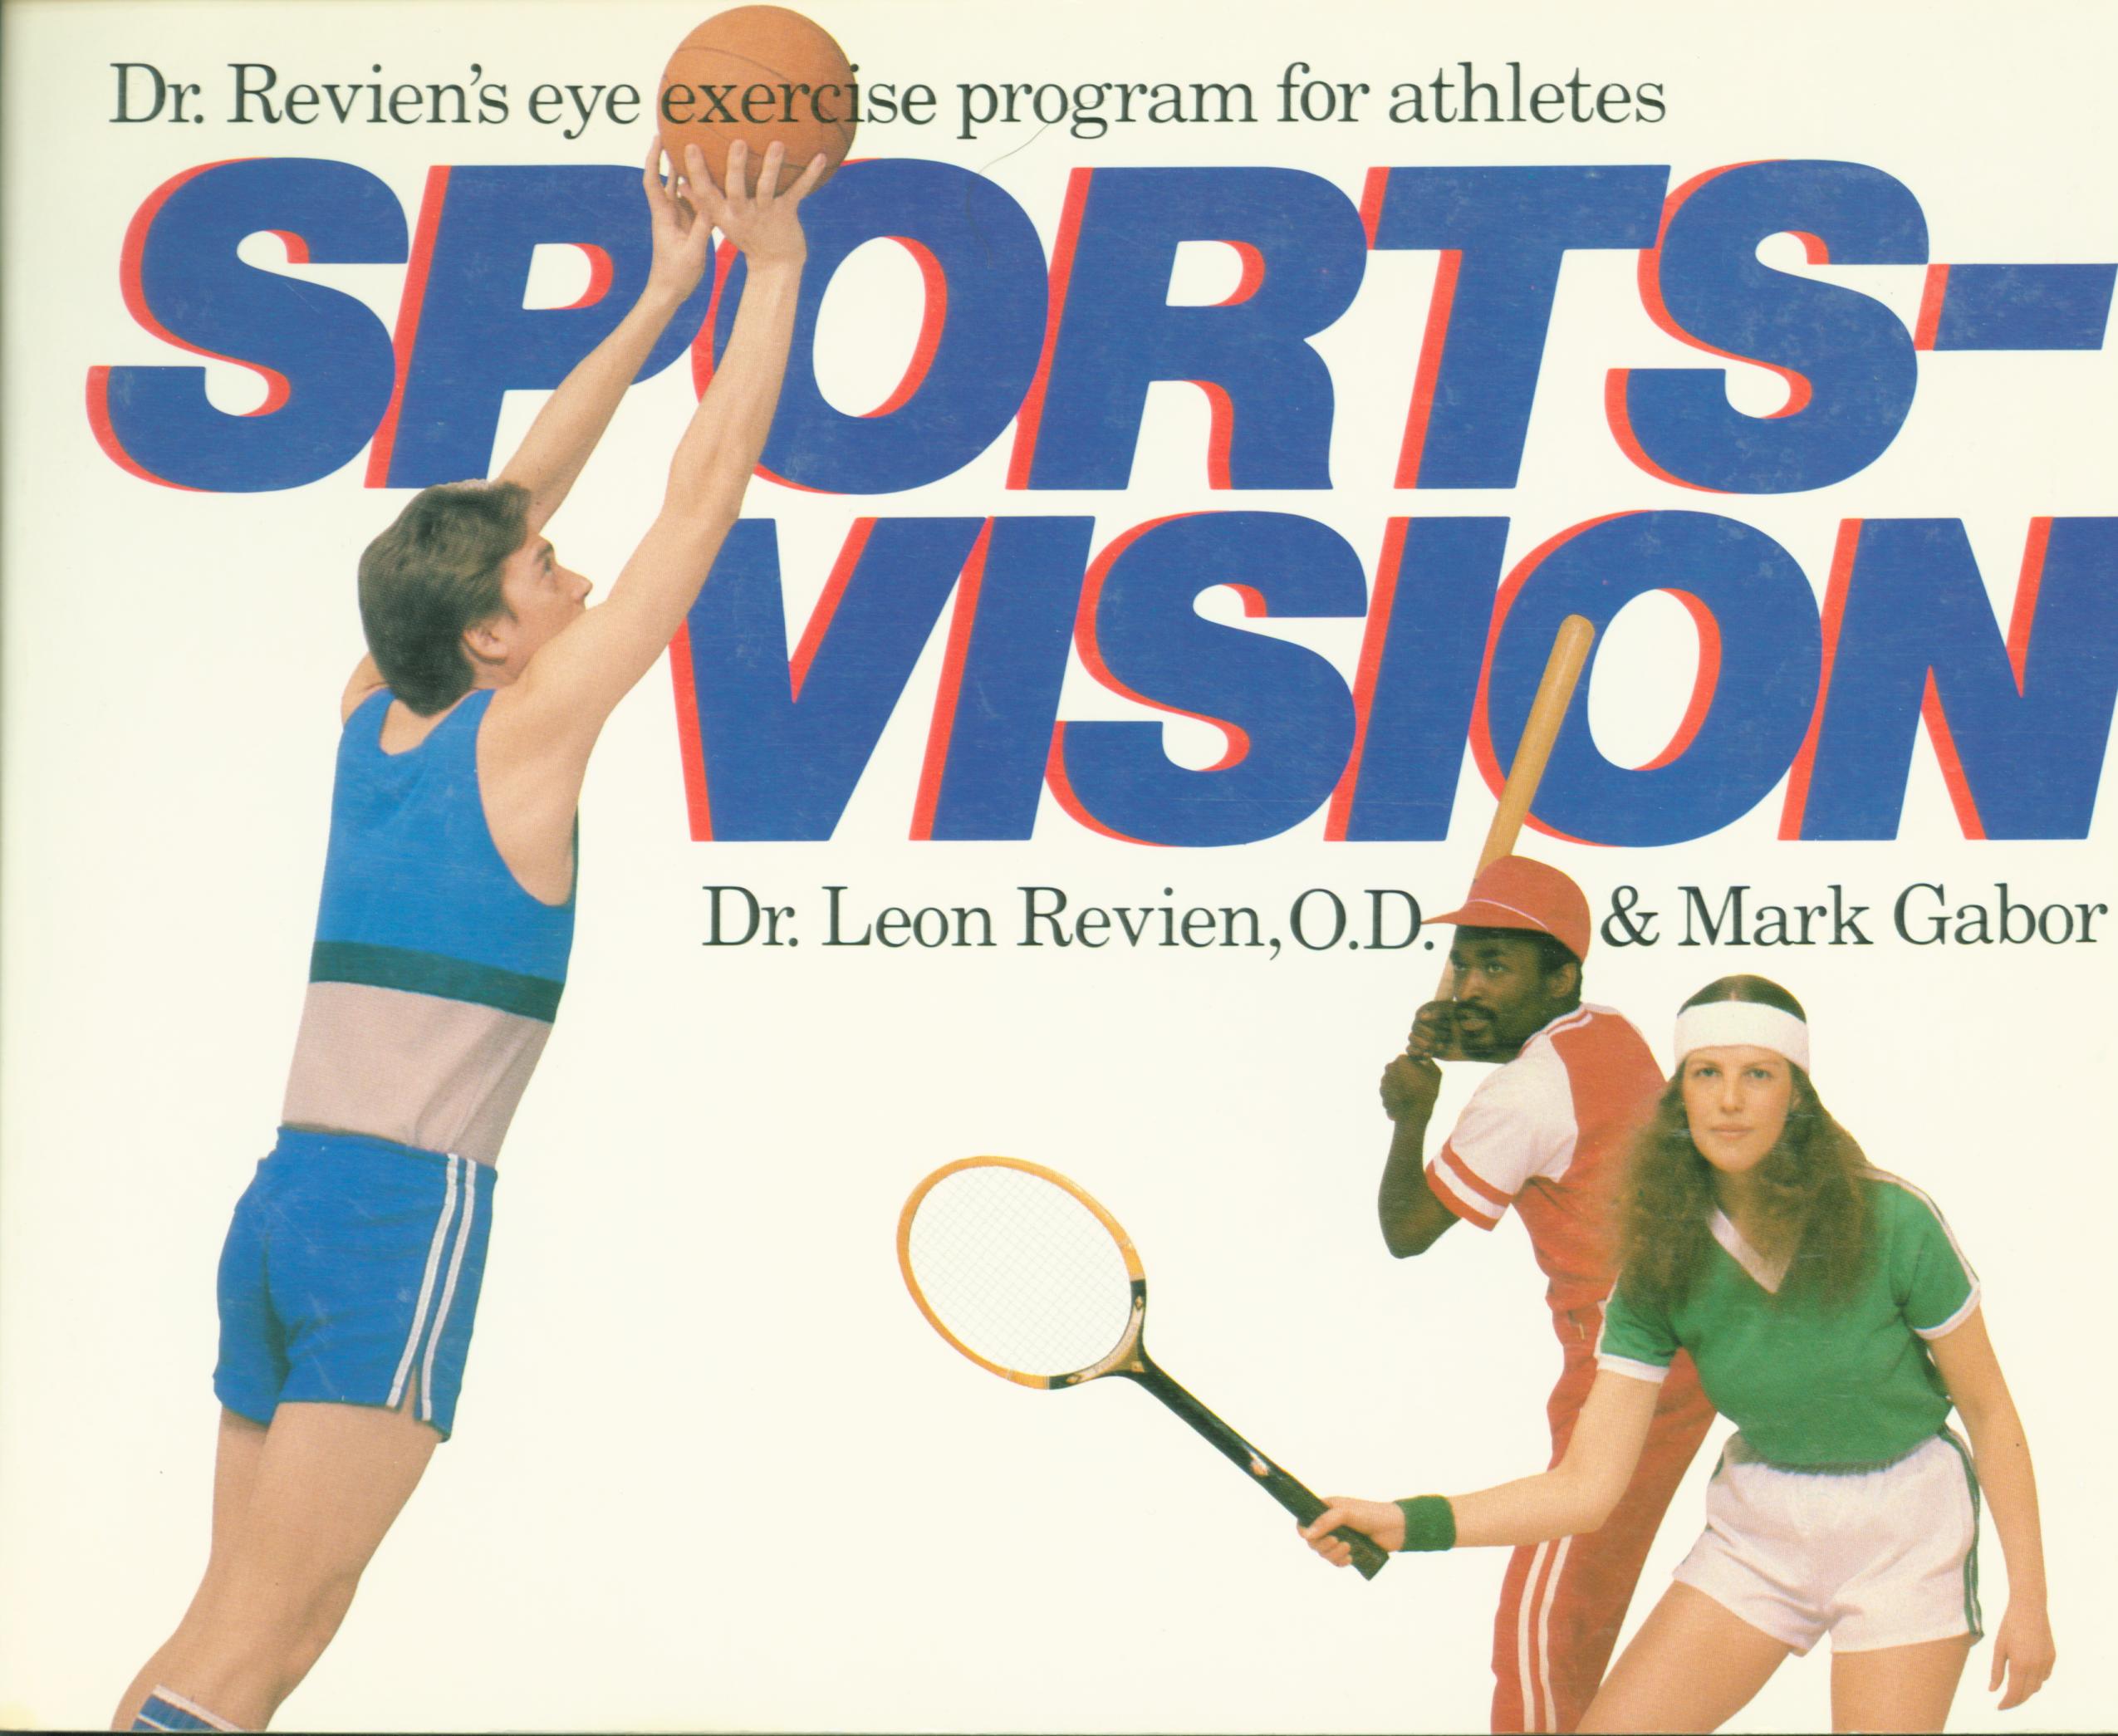 SPORTS-VISION: Dr. Revien's eye exercise program for athletes.